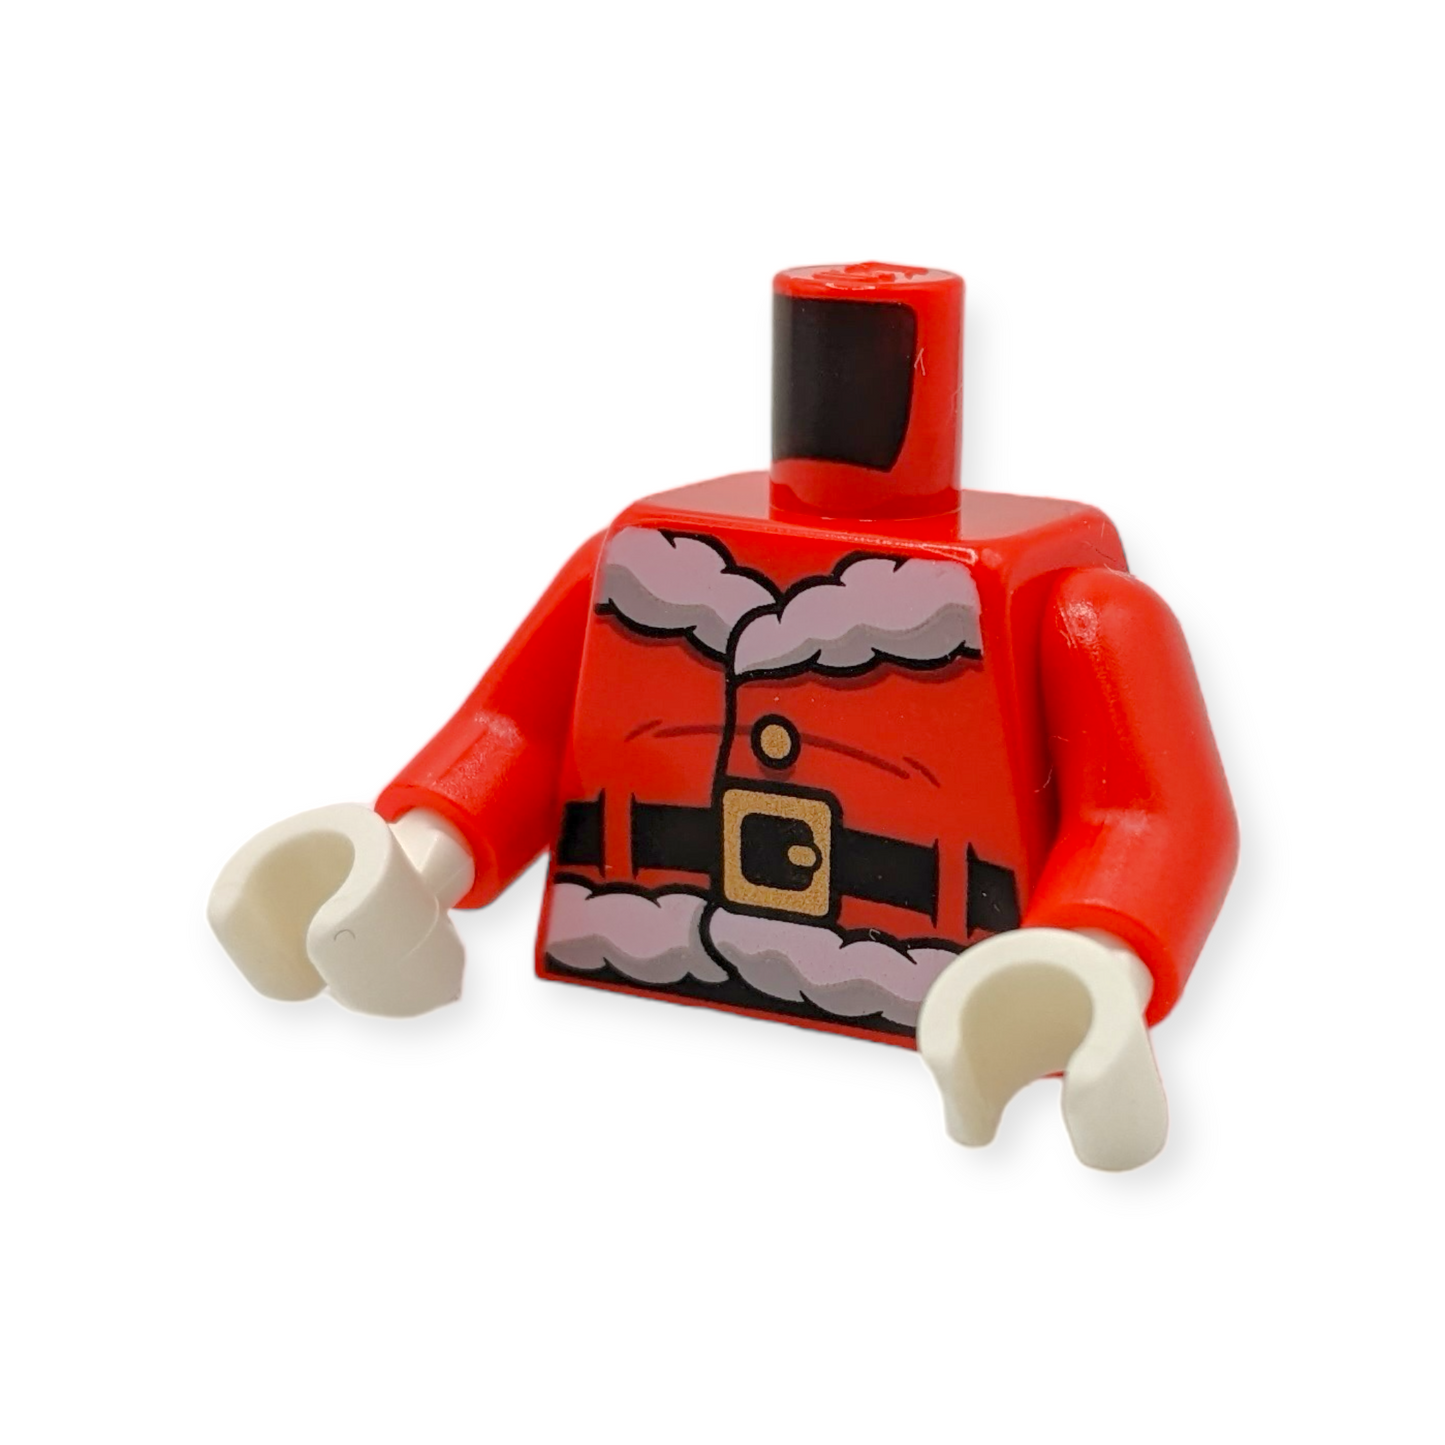 LEGO Torso - 3901 Santa Jacket with White Fur Collar